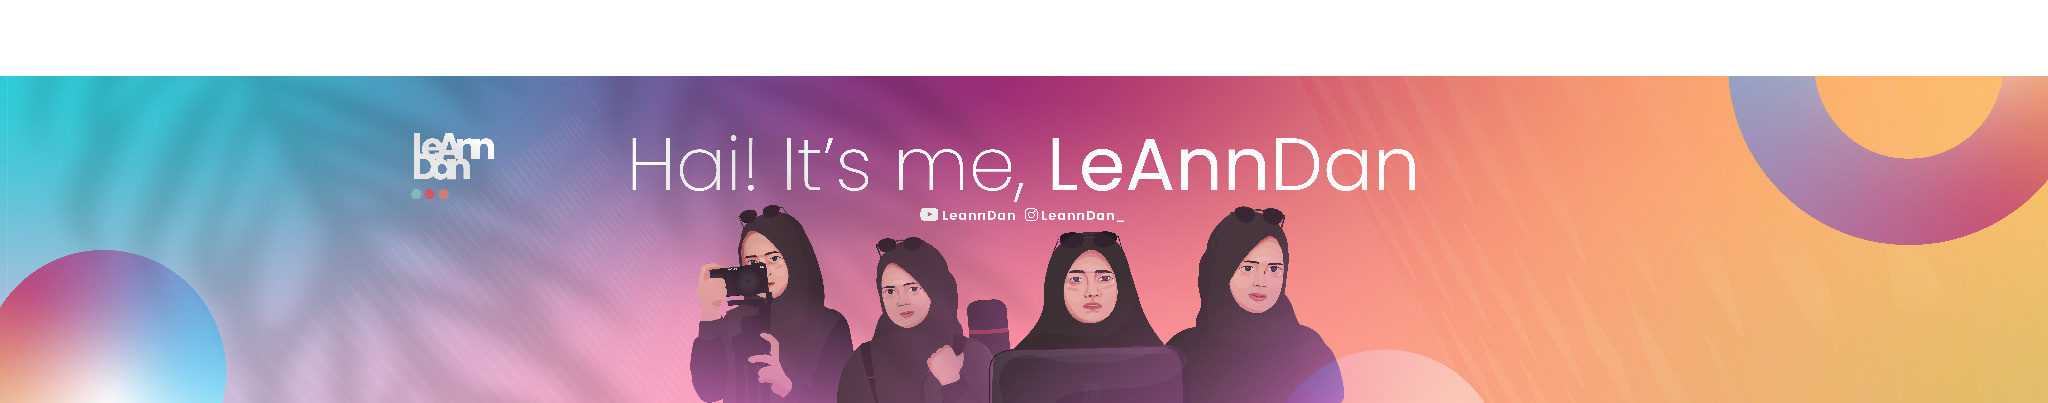 Leann Dan's profile banner